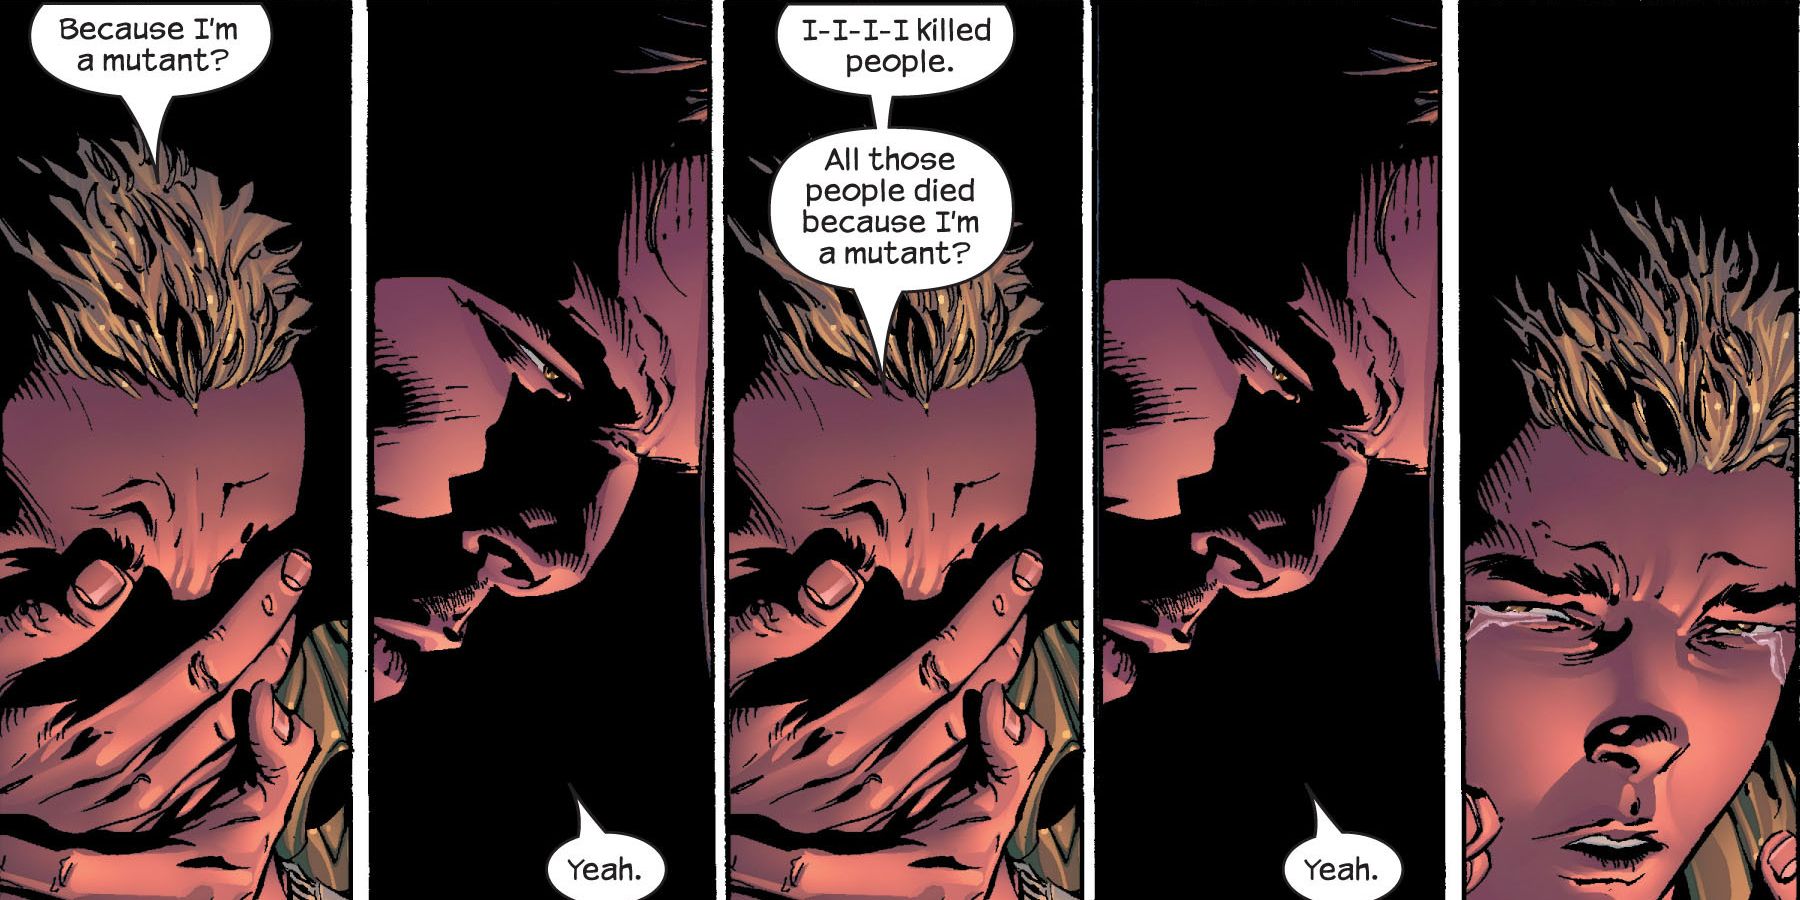 Ultimate X-Men 41 - 誤って人を殺した若いミュータントと話すウルヴァリン